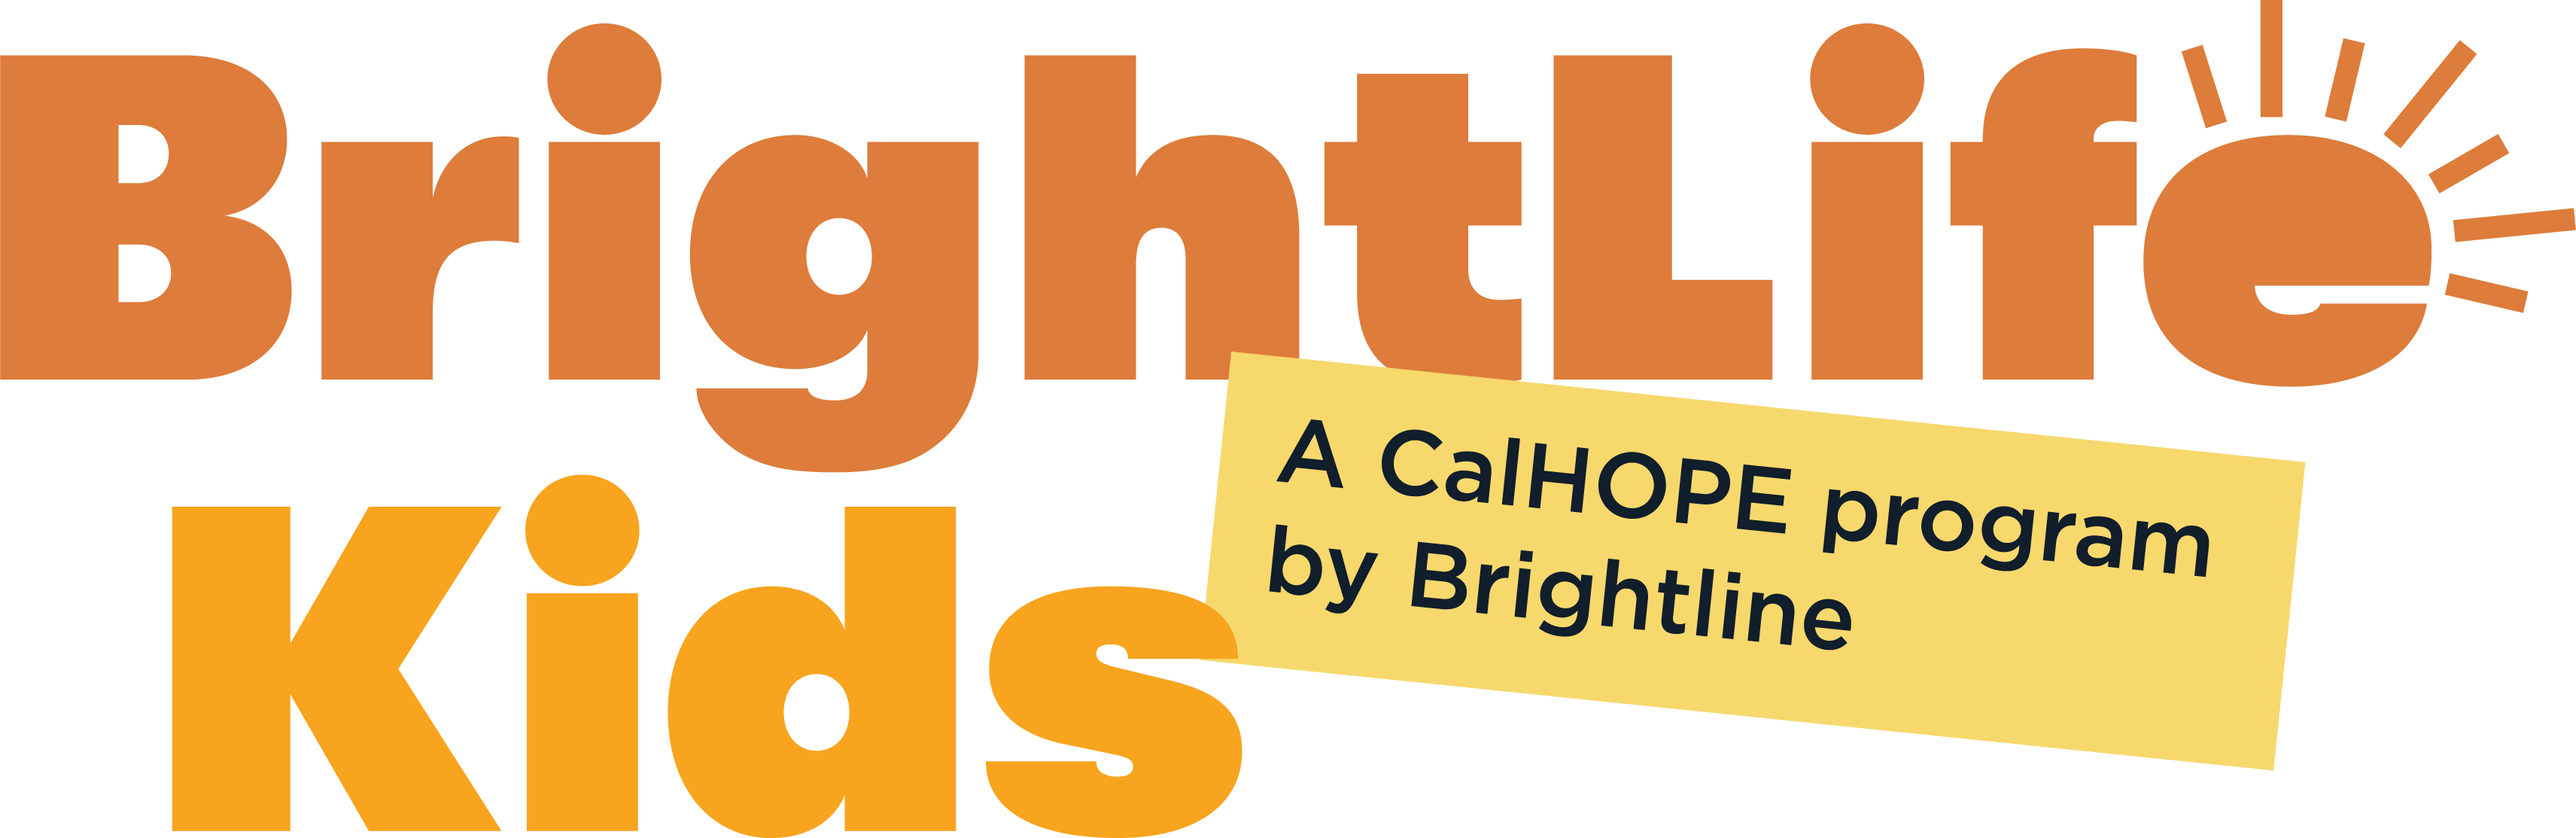 brightlife-kids-logo-calhope-program-by-brightline